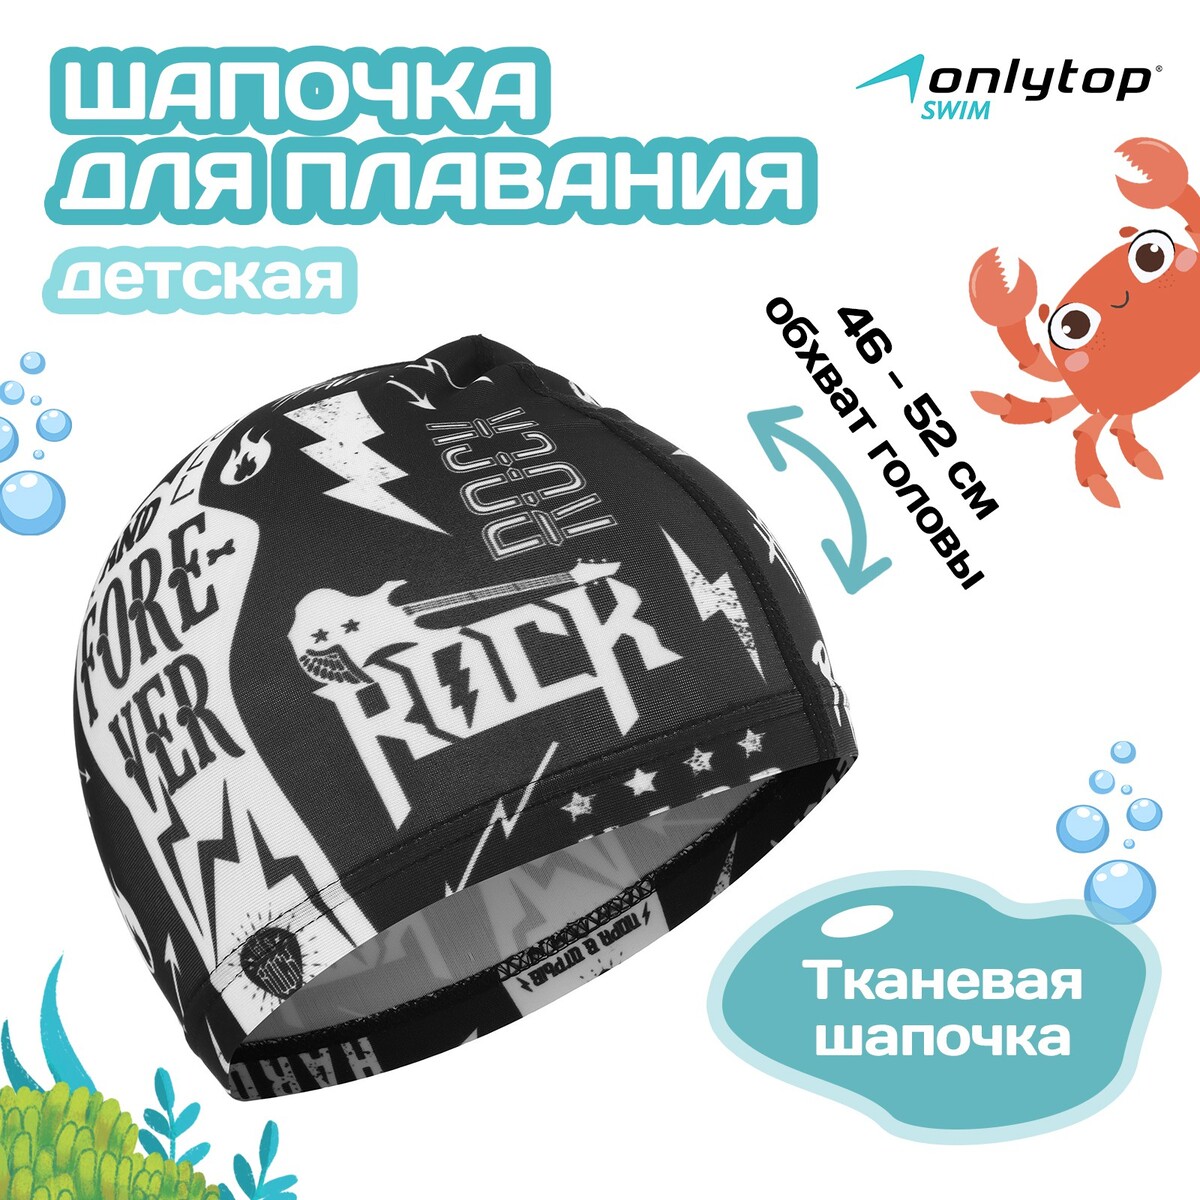 Шапочка для плавания детская rock and roll, тканевая, обхват 46-52 см